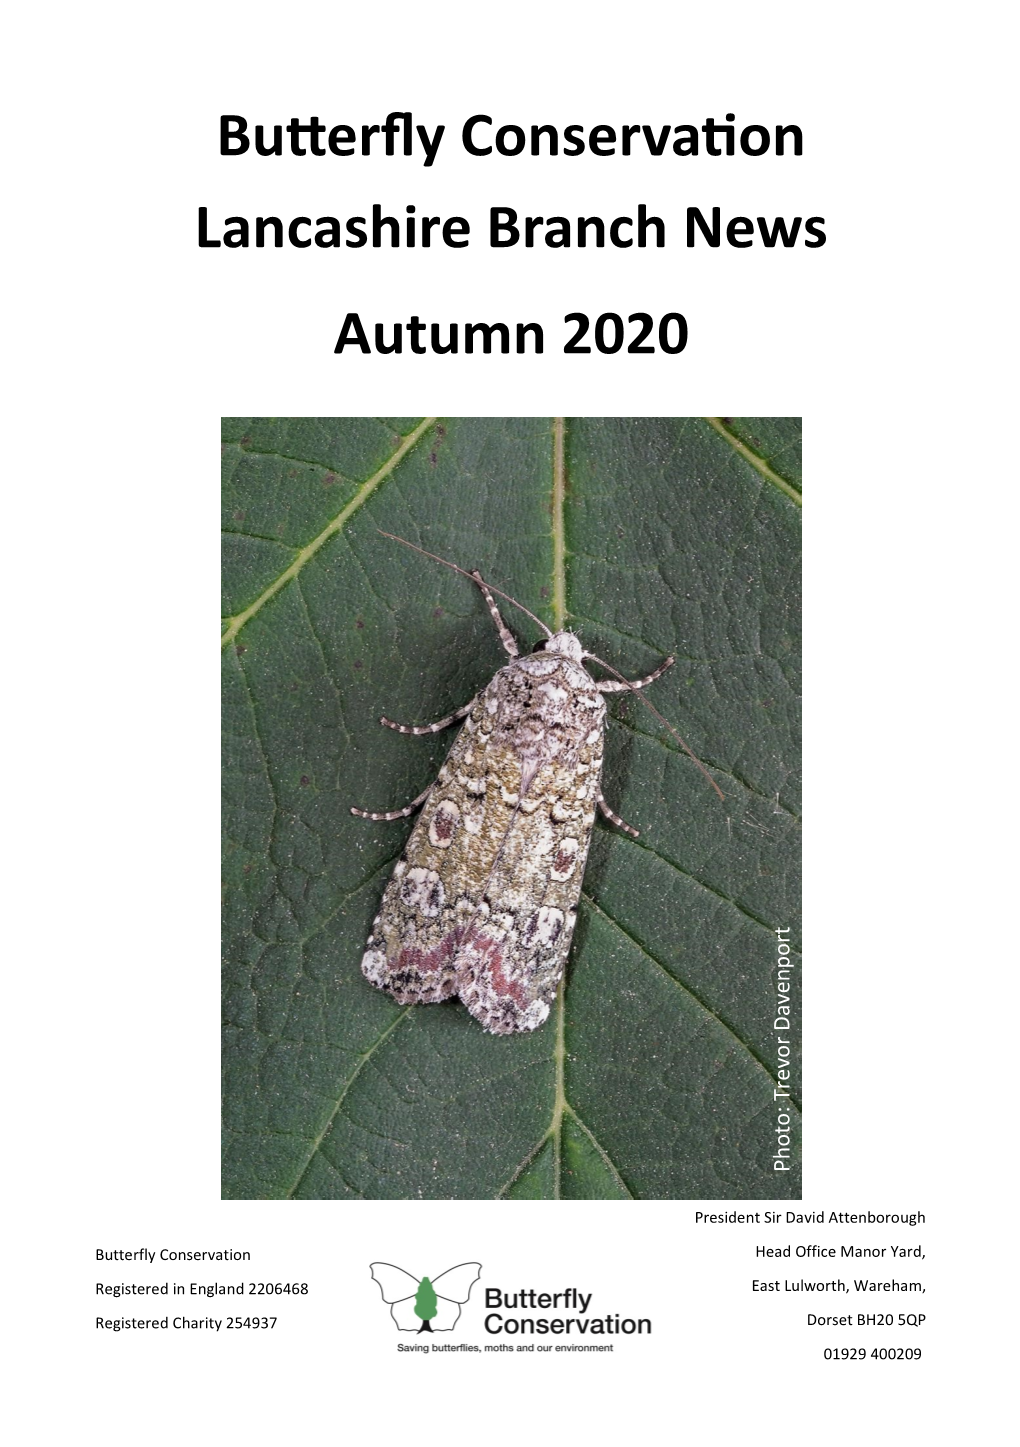 Butterfly Conservation Lancashire Branch News Autumn 2020